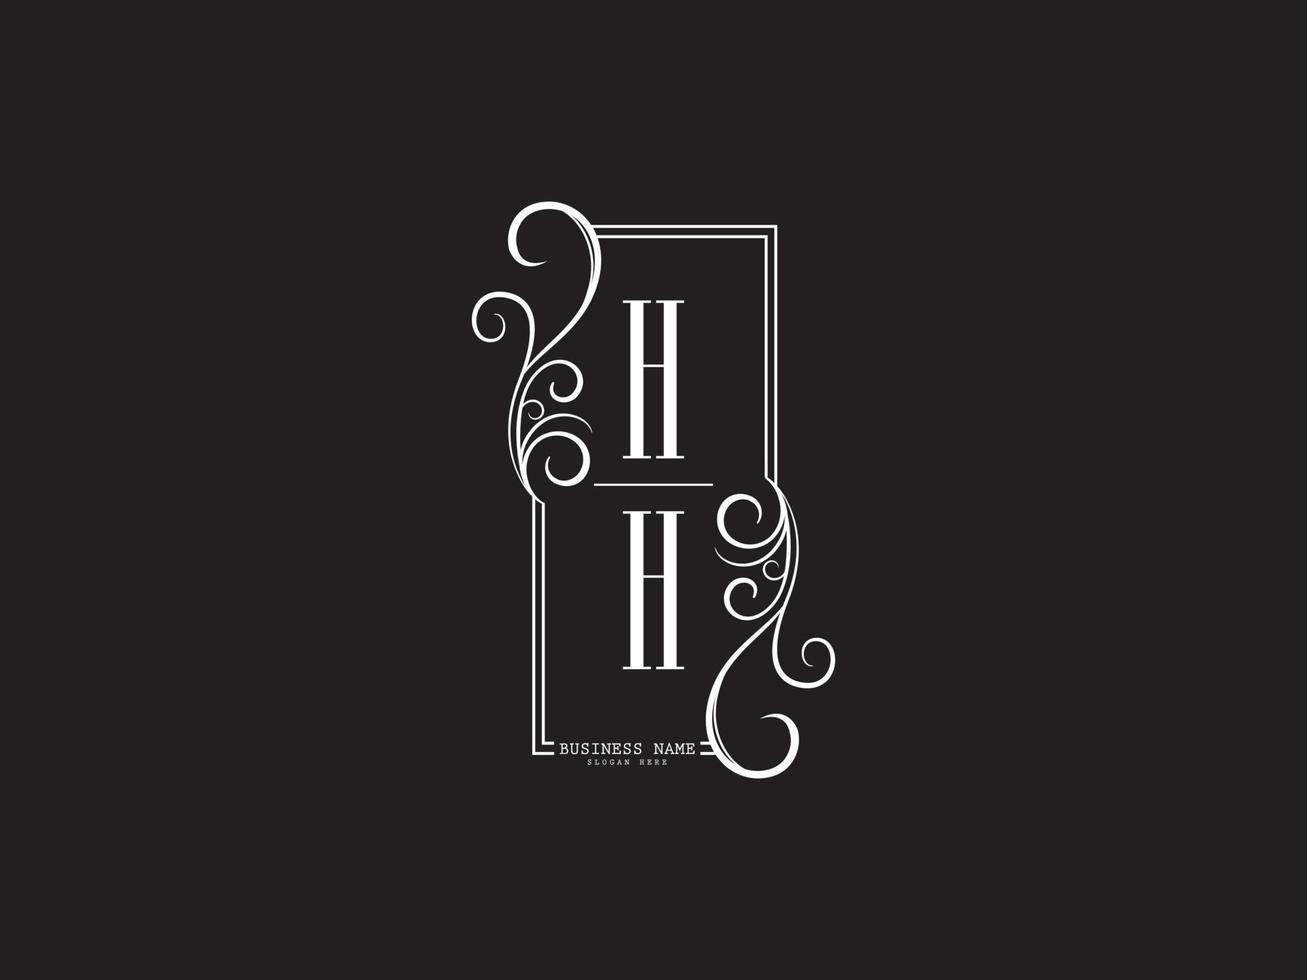 design de imagem vetorial de carta de logotipo de luxo minimalista hh hh vetor